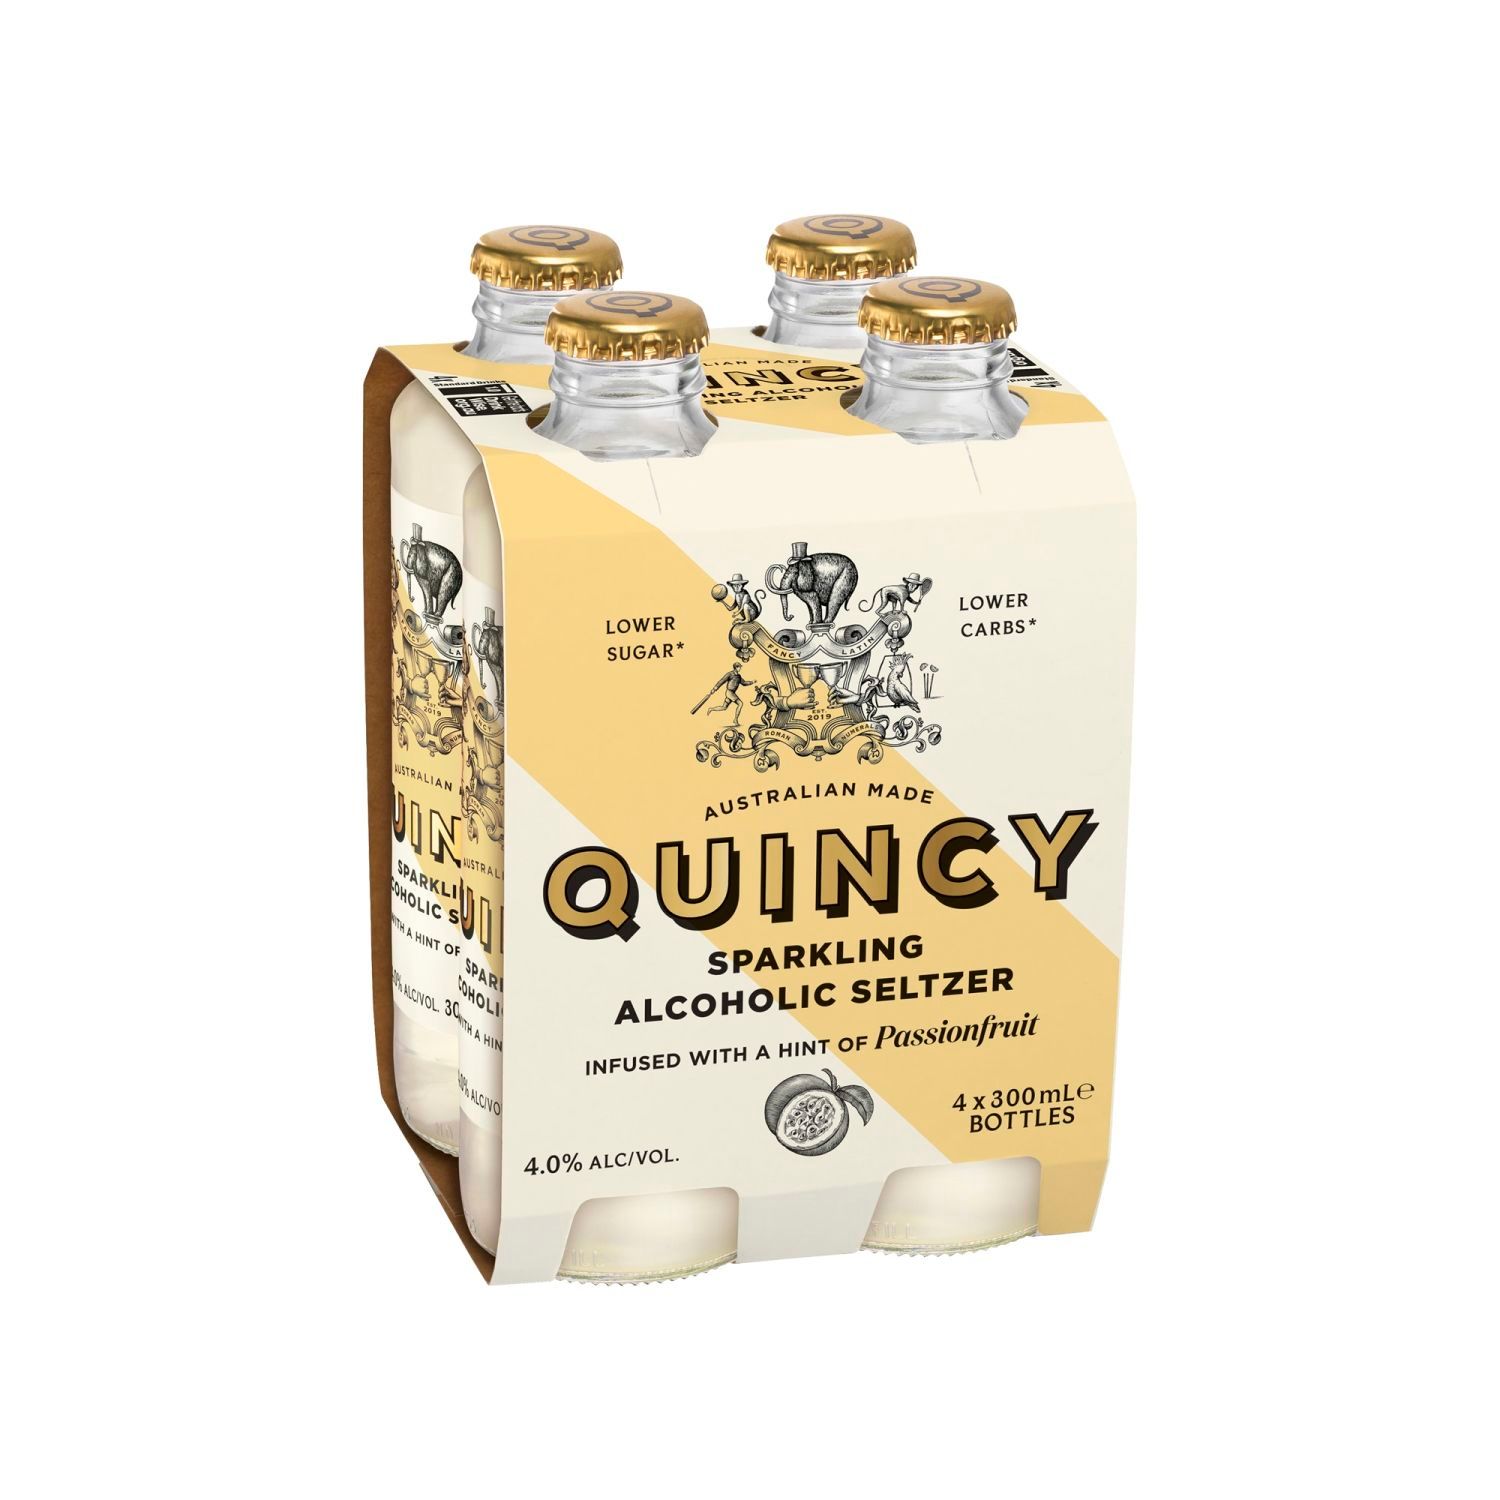 Quincy Sparkling Passionfruit Alcoholic Seltzers Bottle 300mL 4 Pack